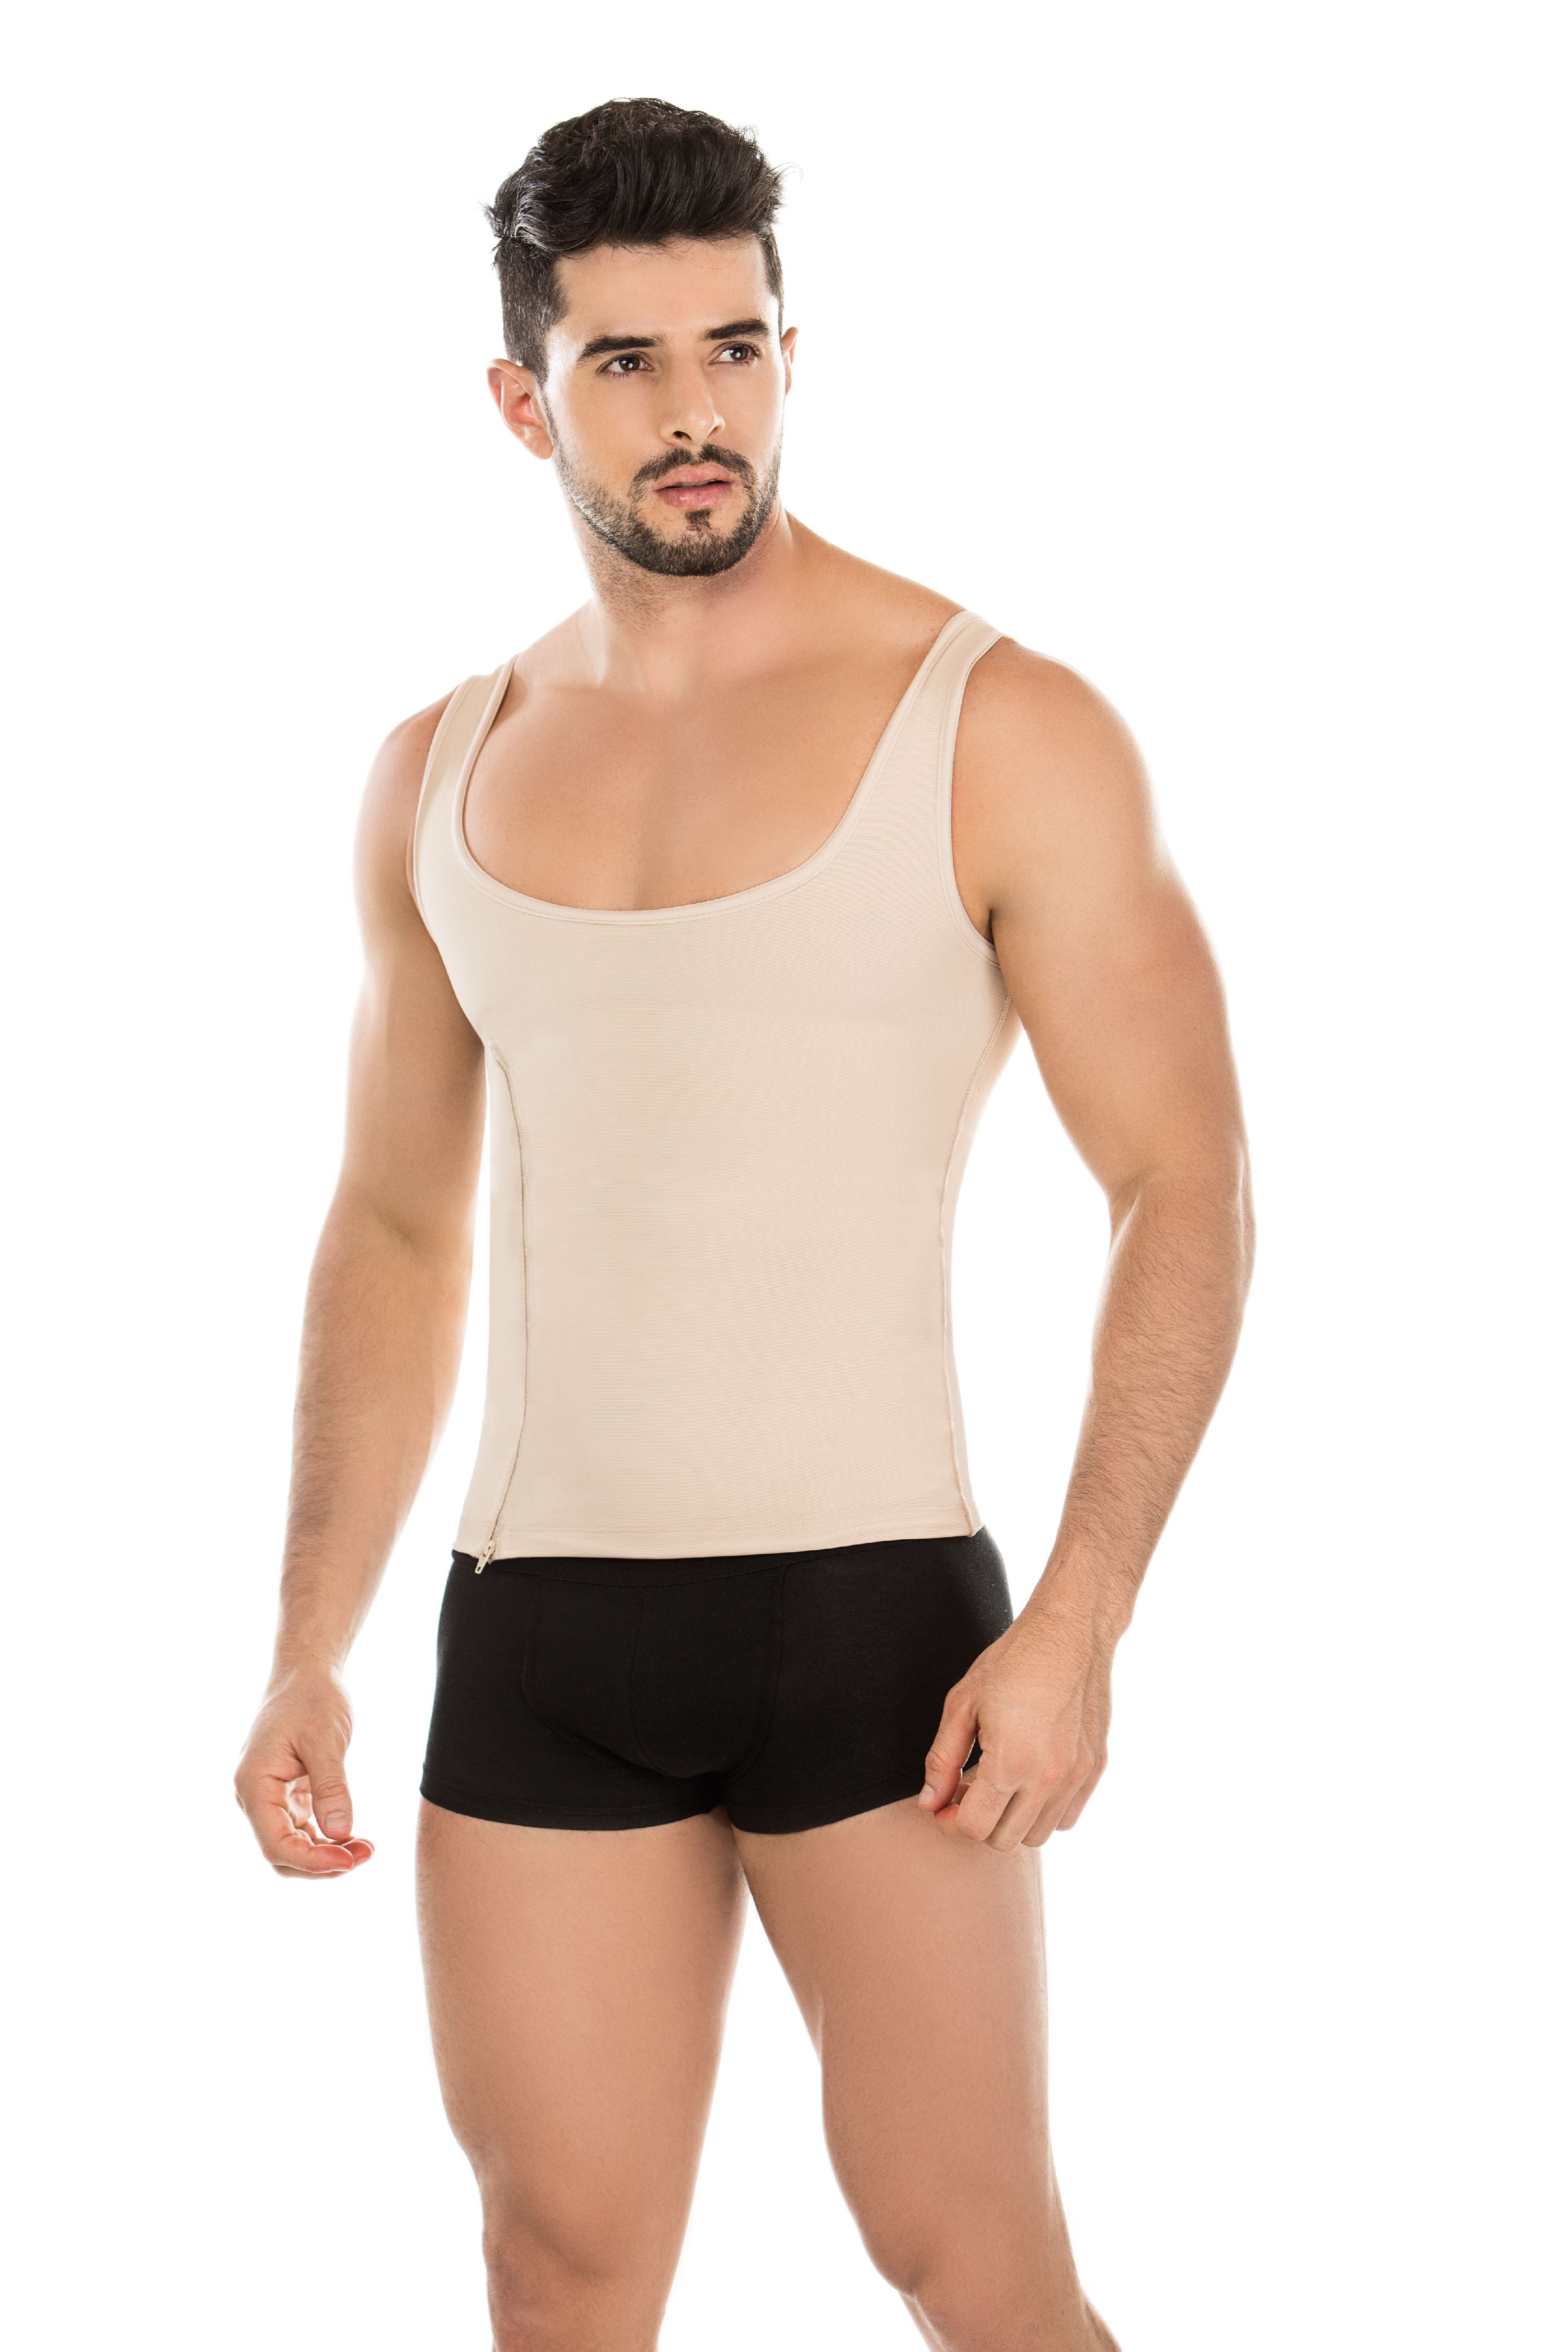 Fajas Colombianas Men's tank top zipper low back disc posture corrector faja  hombre reductora colombiana-Shapewear & Fajas USA 